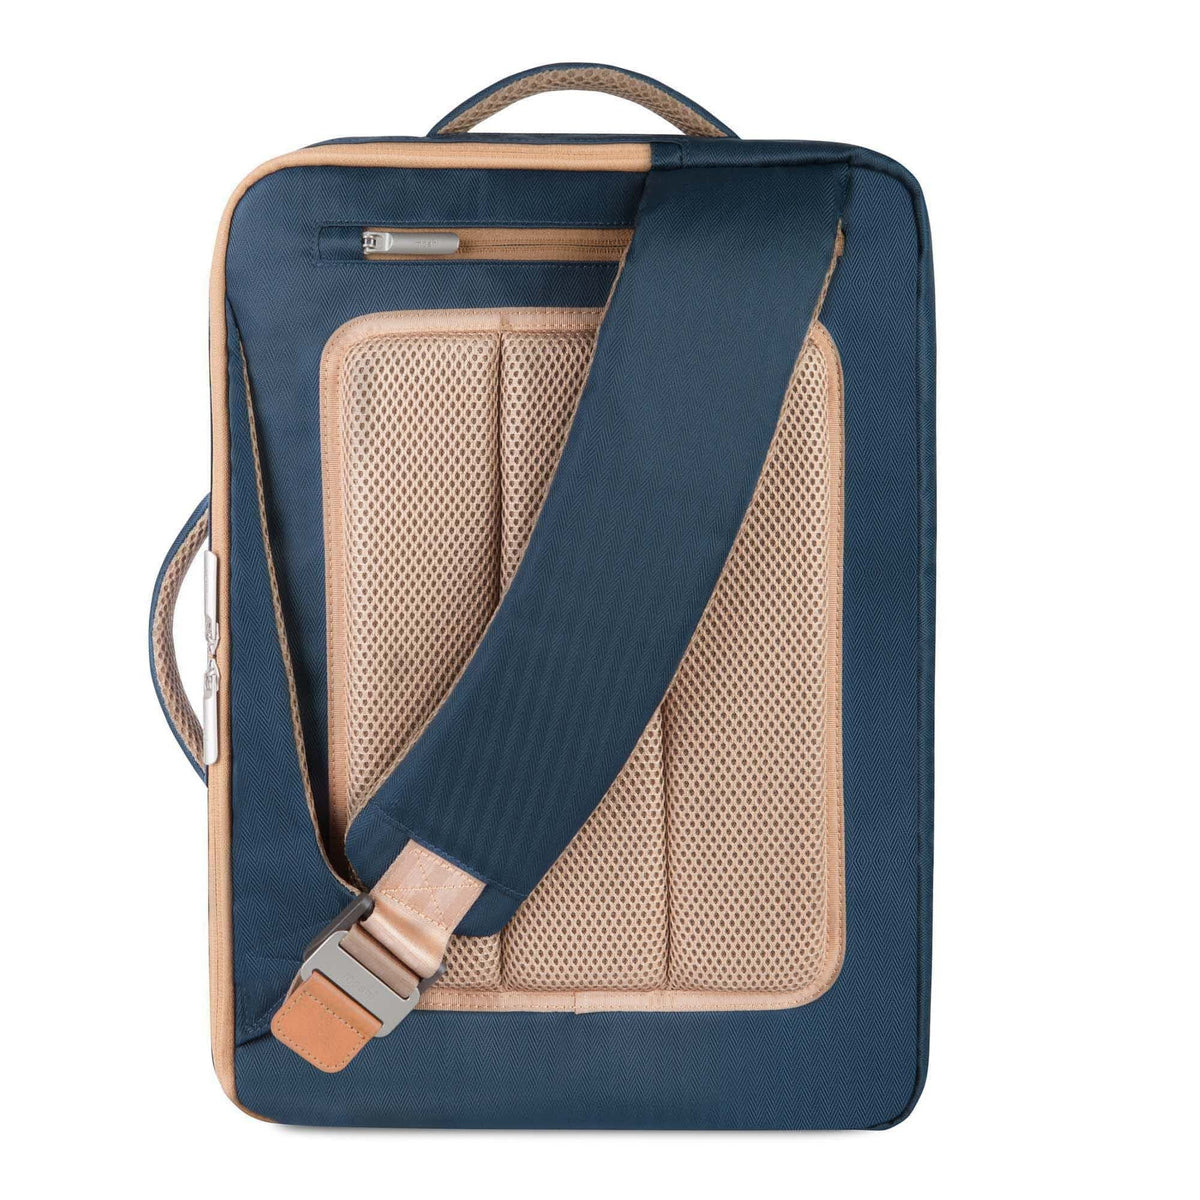 Moshi Venturo laptop backpack